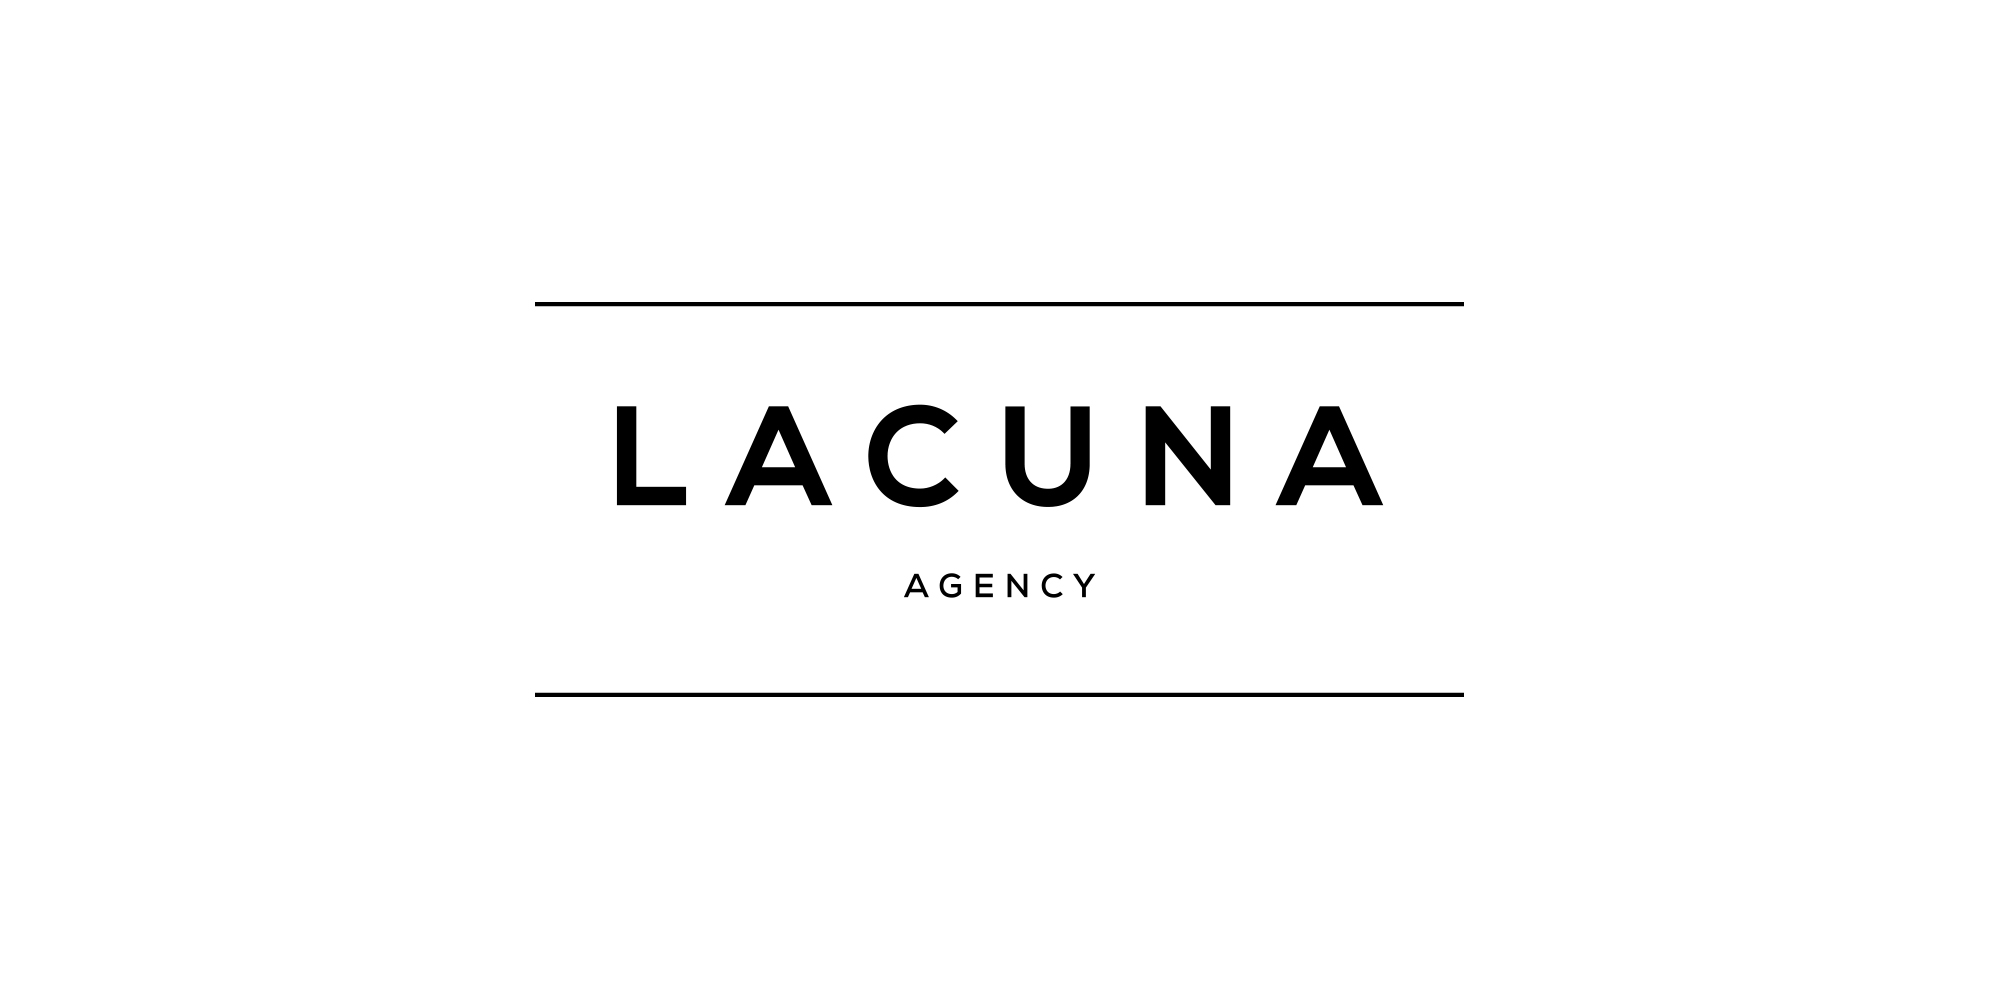 Lacuna Agency Branding